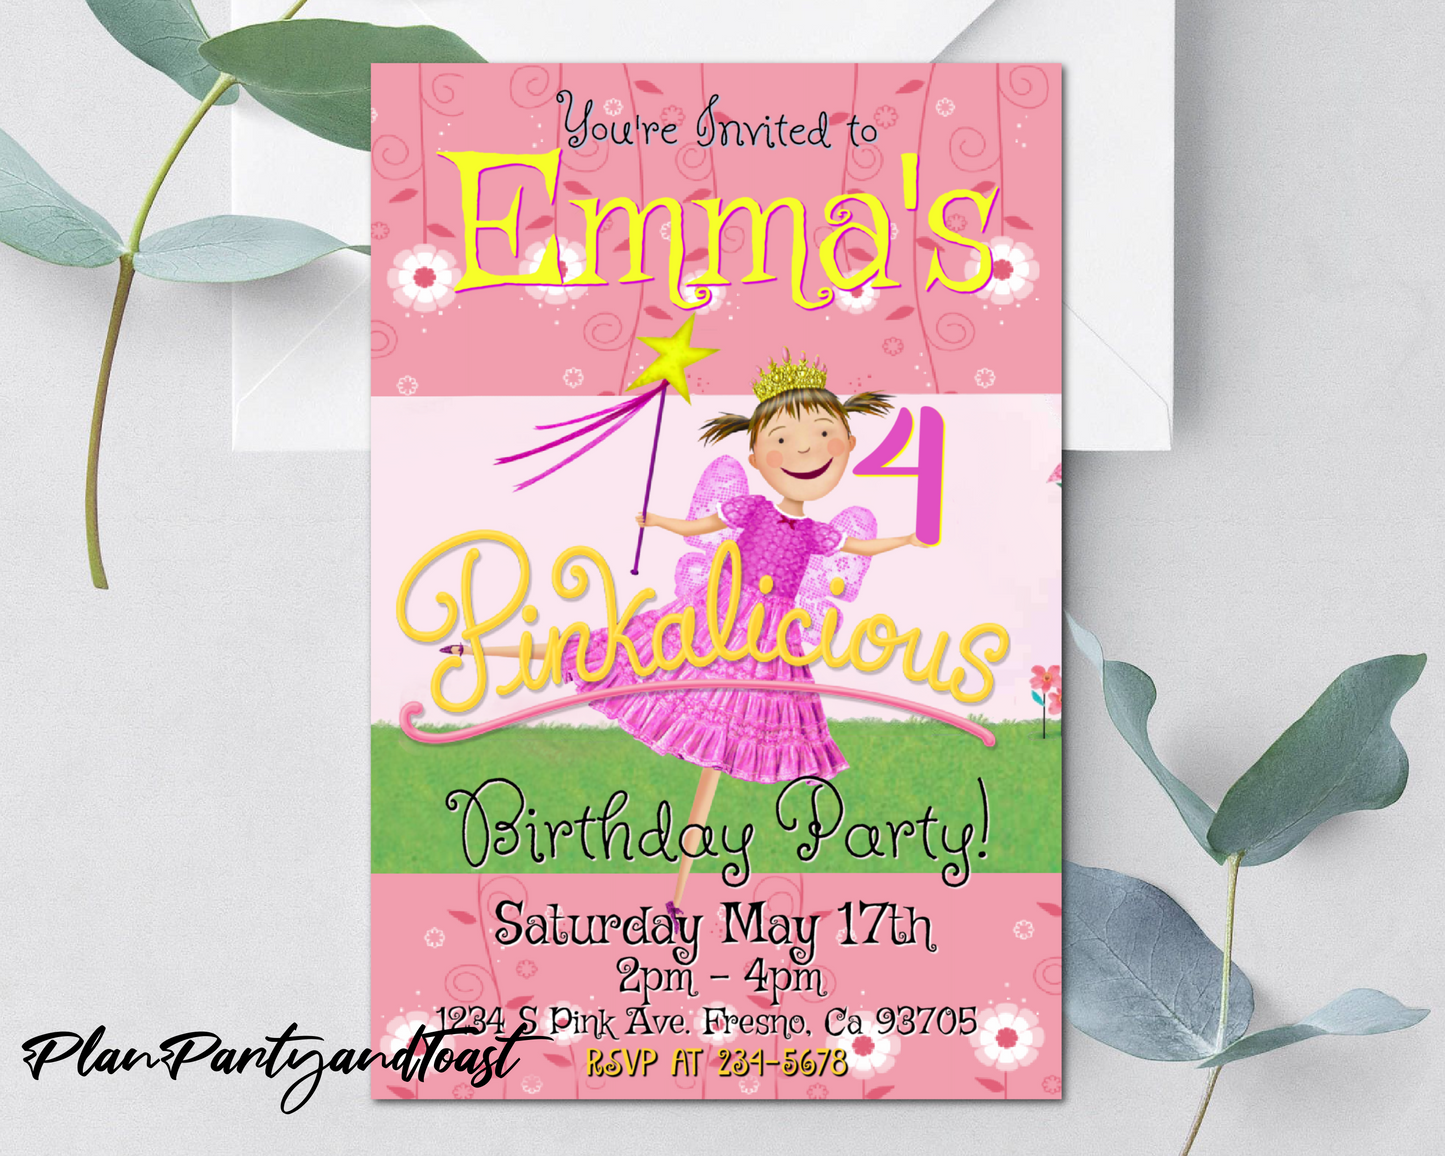 Pinkalicious birthday invitation